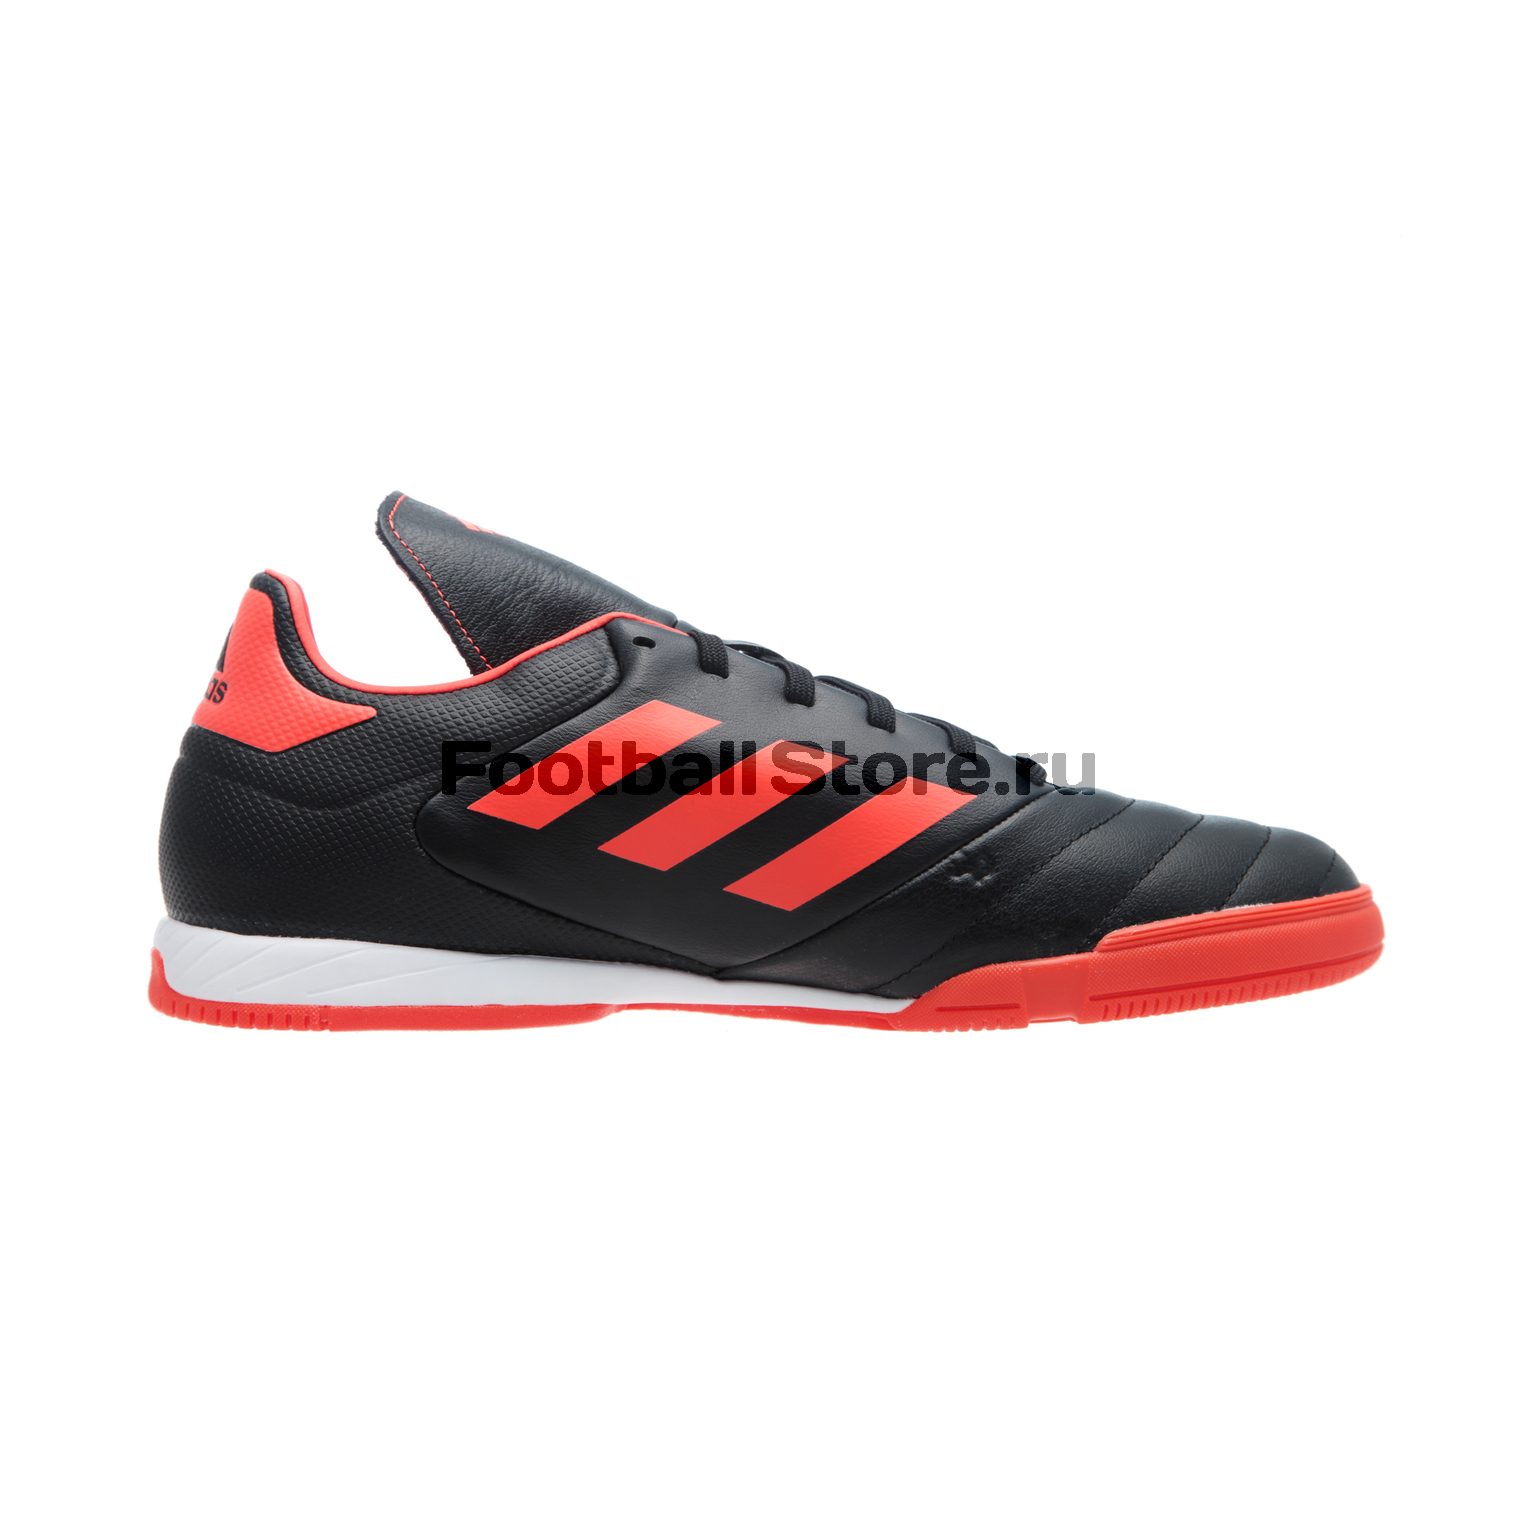 Обувь для зала Adidas Copa Tango 17.3 IN S77148